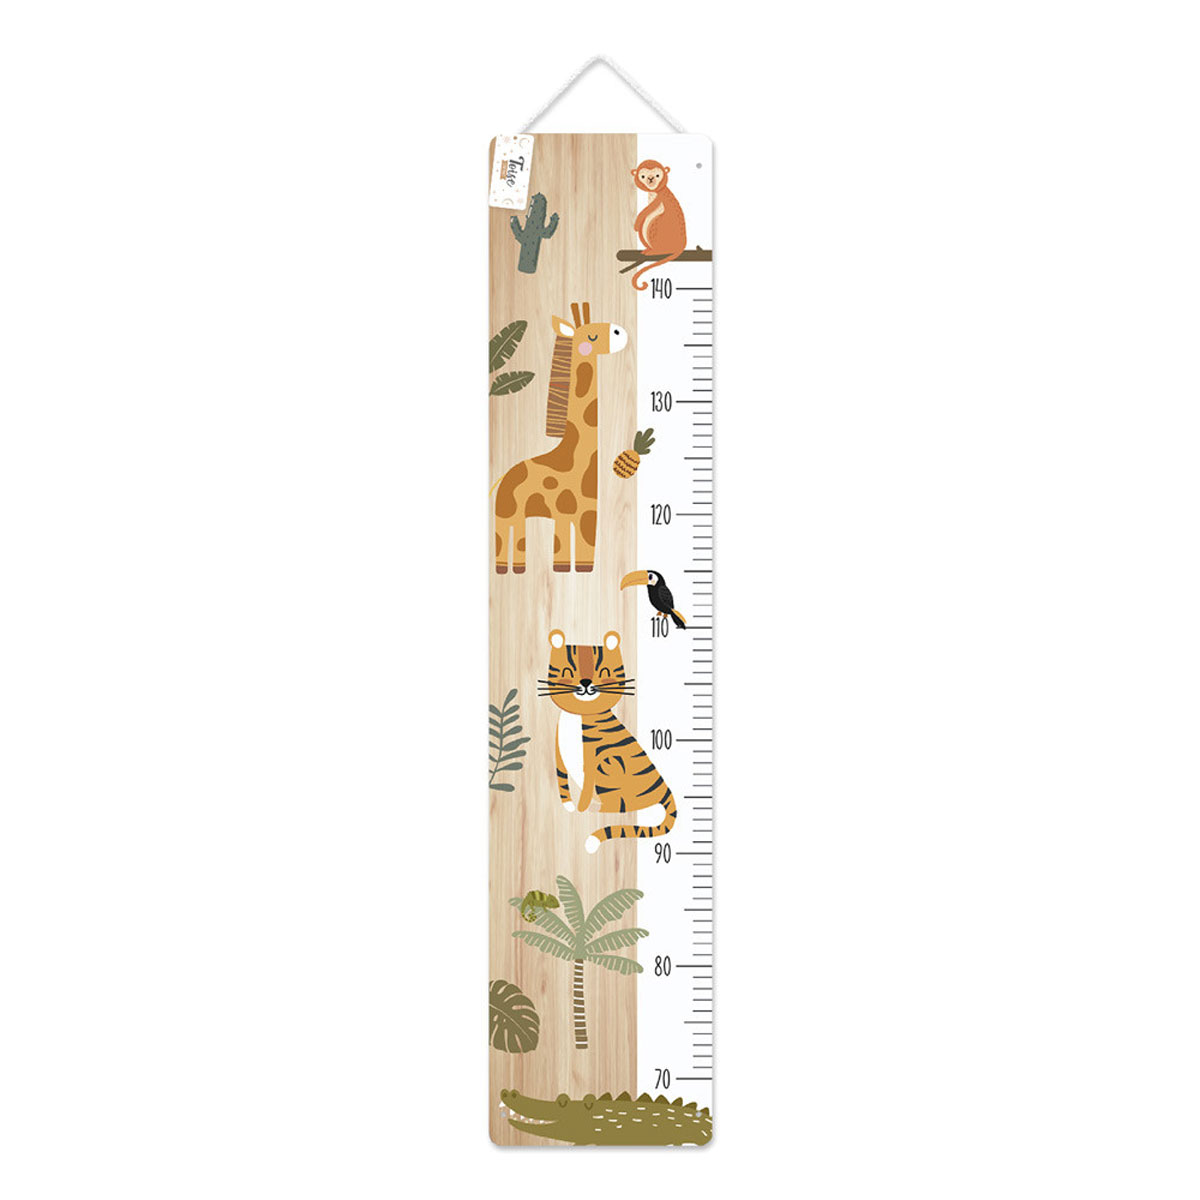 Height chart for children's room jungle